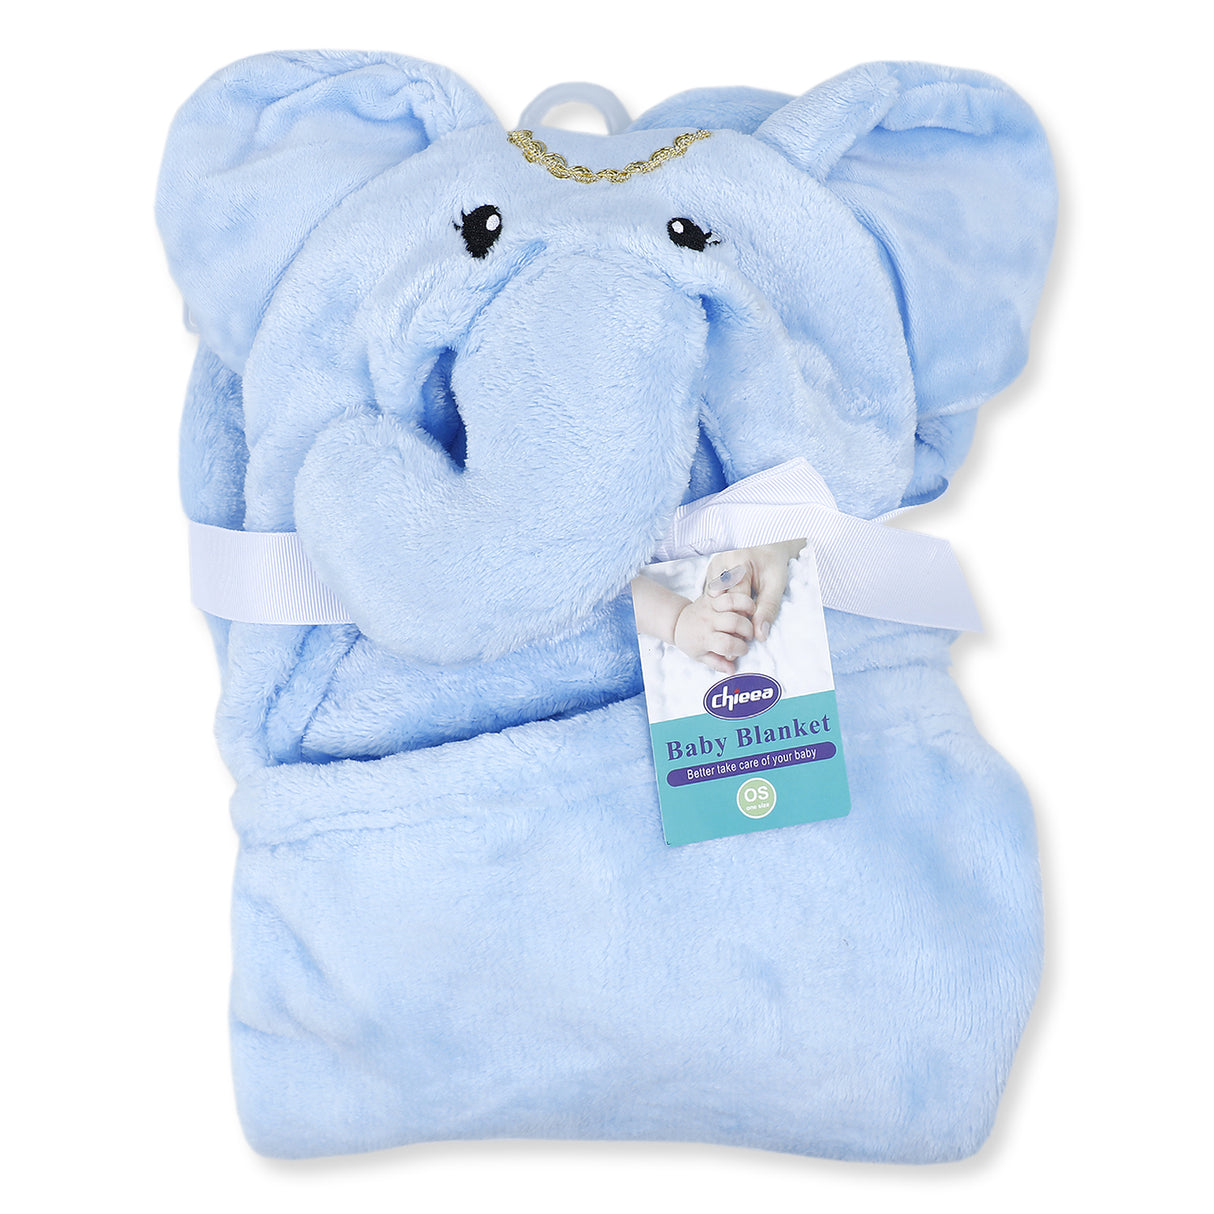 Chieea Elephant Animal Hooded Blanket